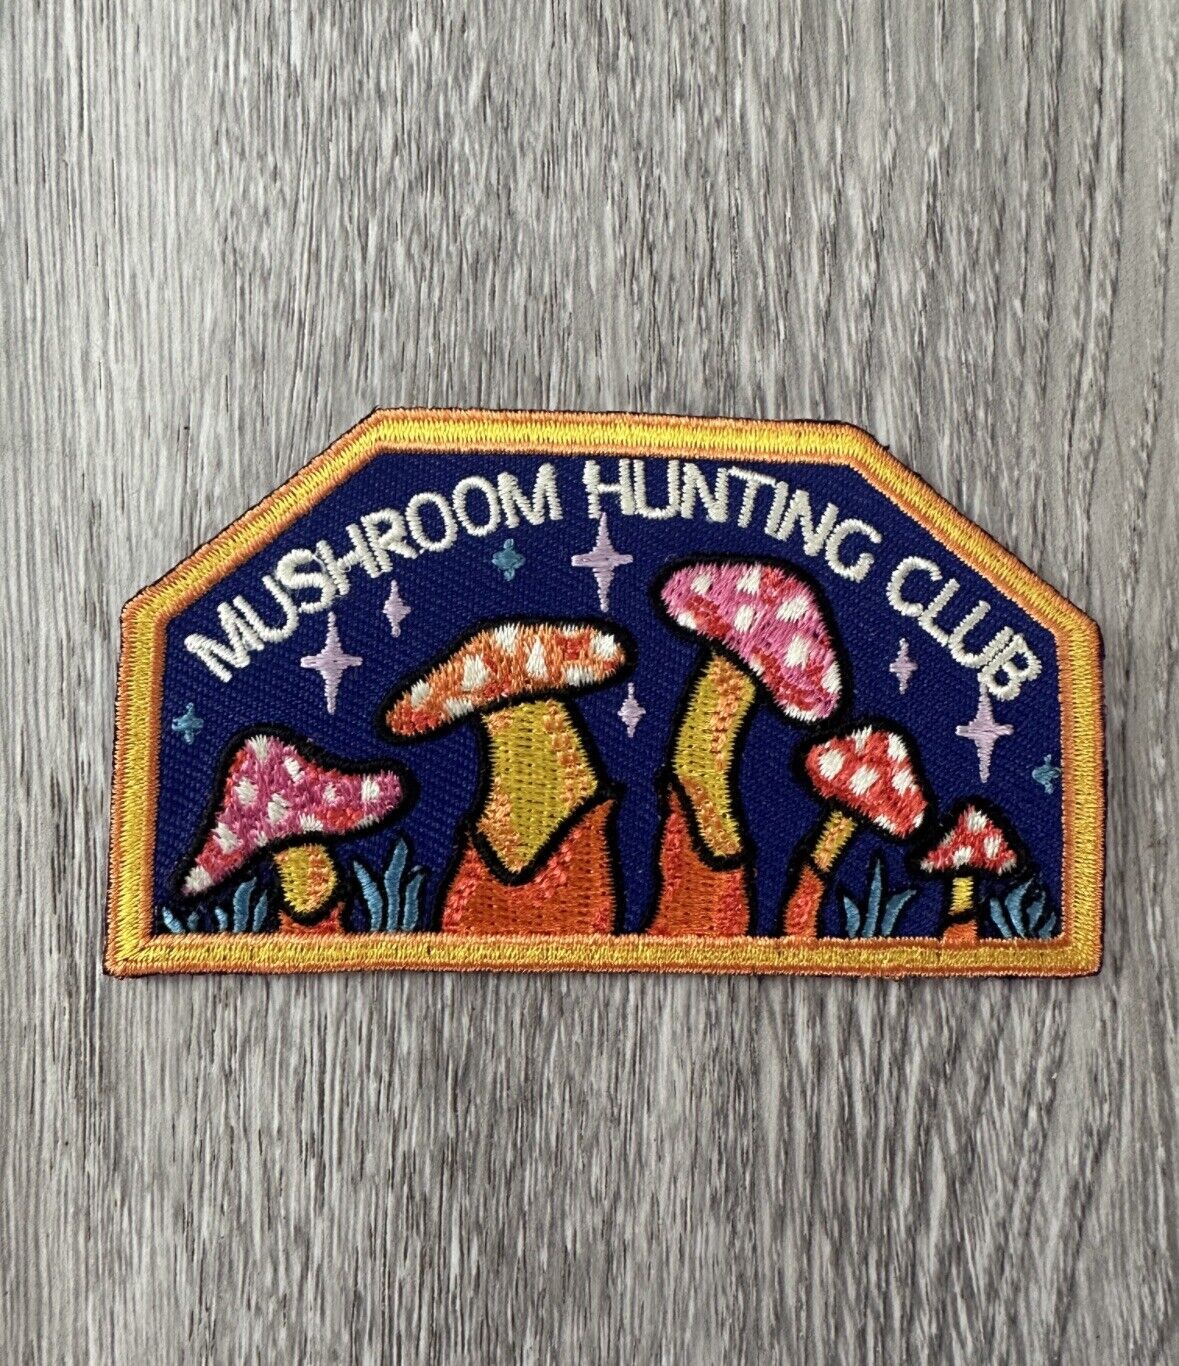 Mushroom Hunting Club Midnight edition Sew On Patch 3”